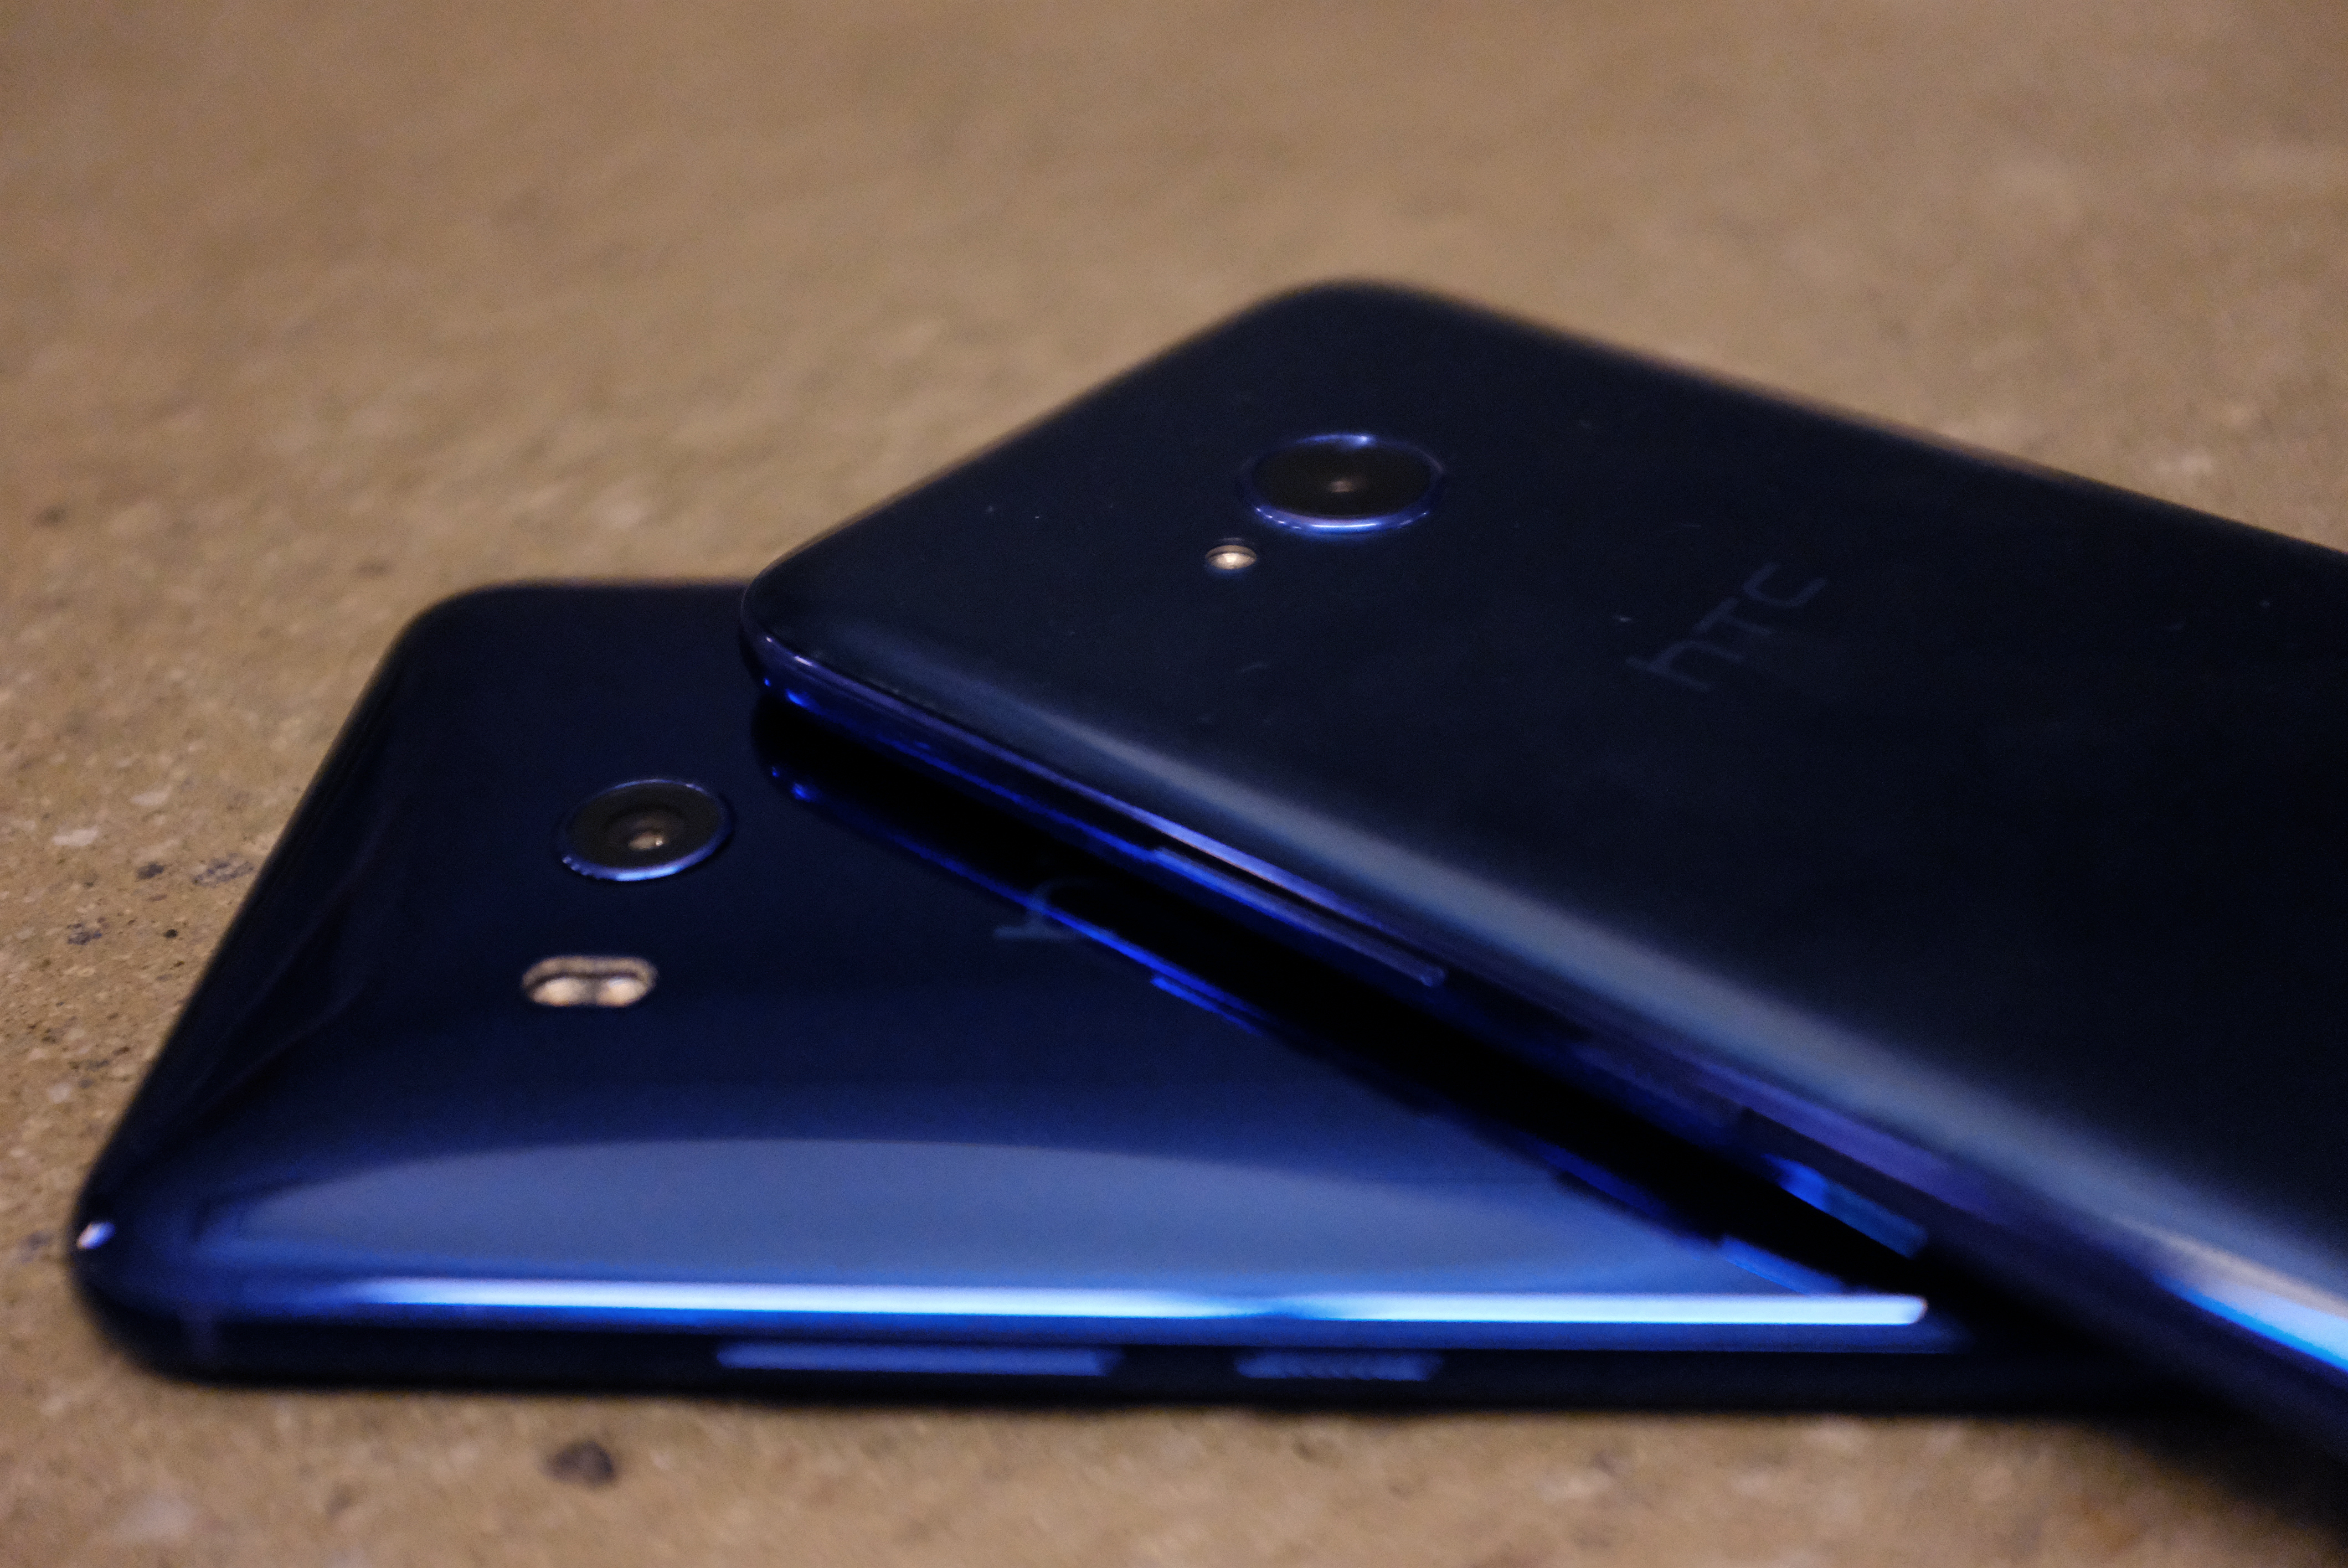 HTC intros a $349 version of the U11